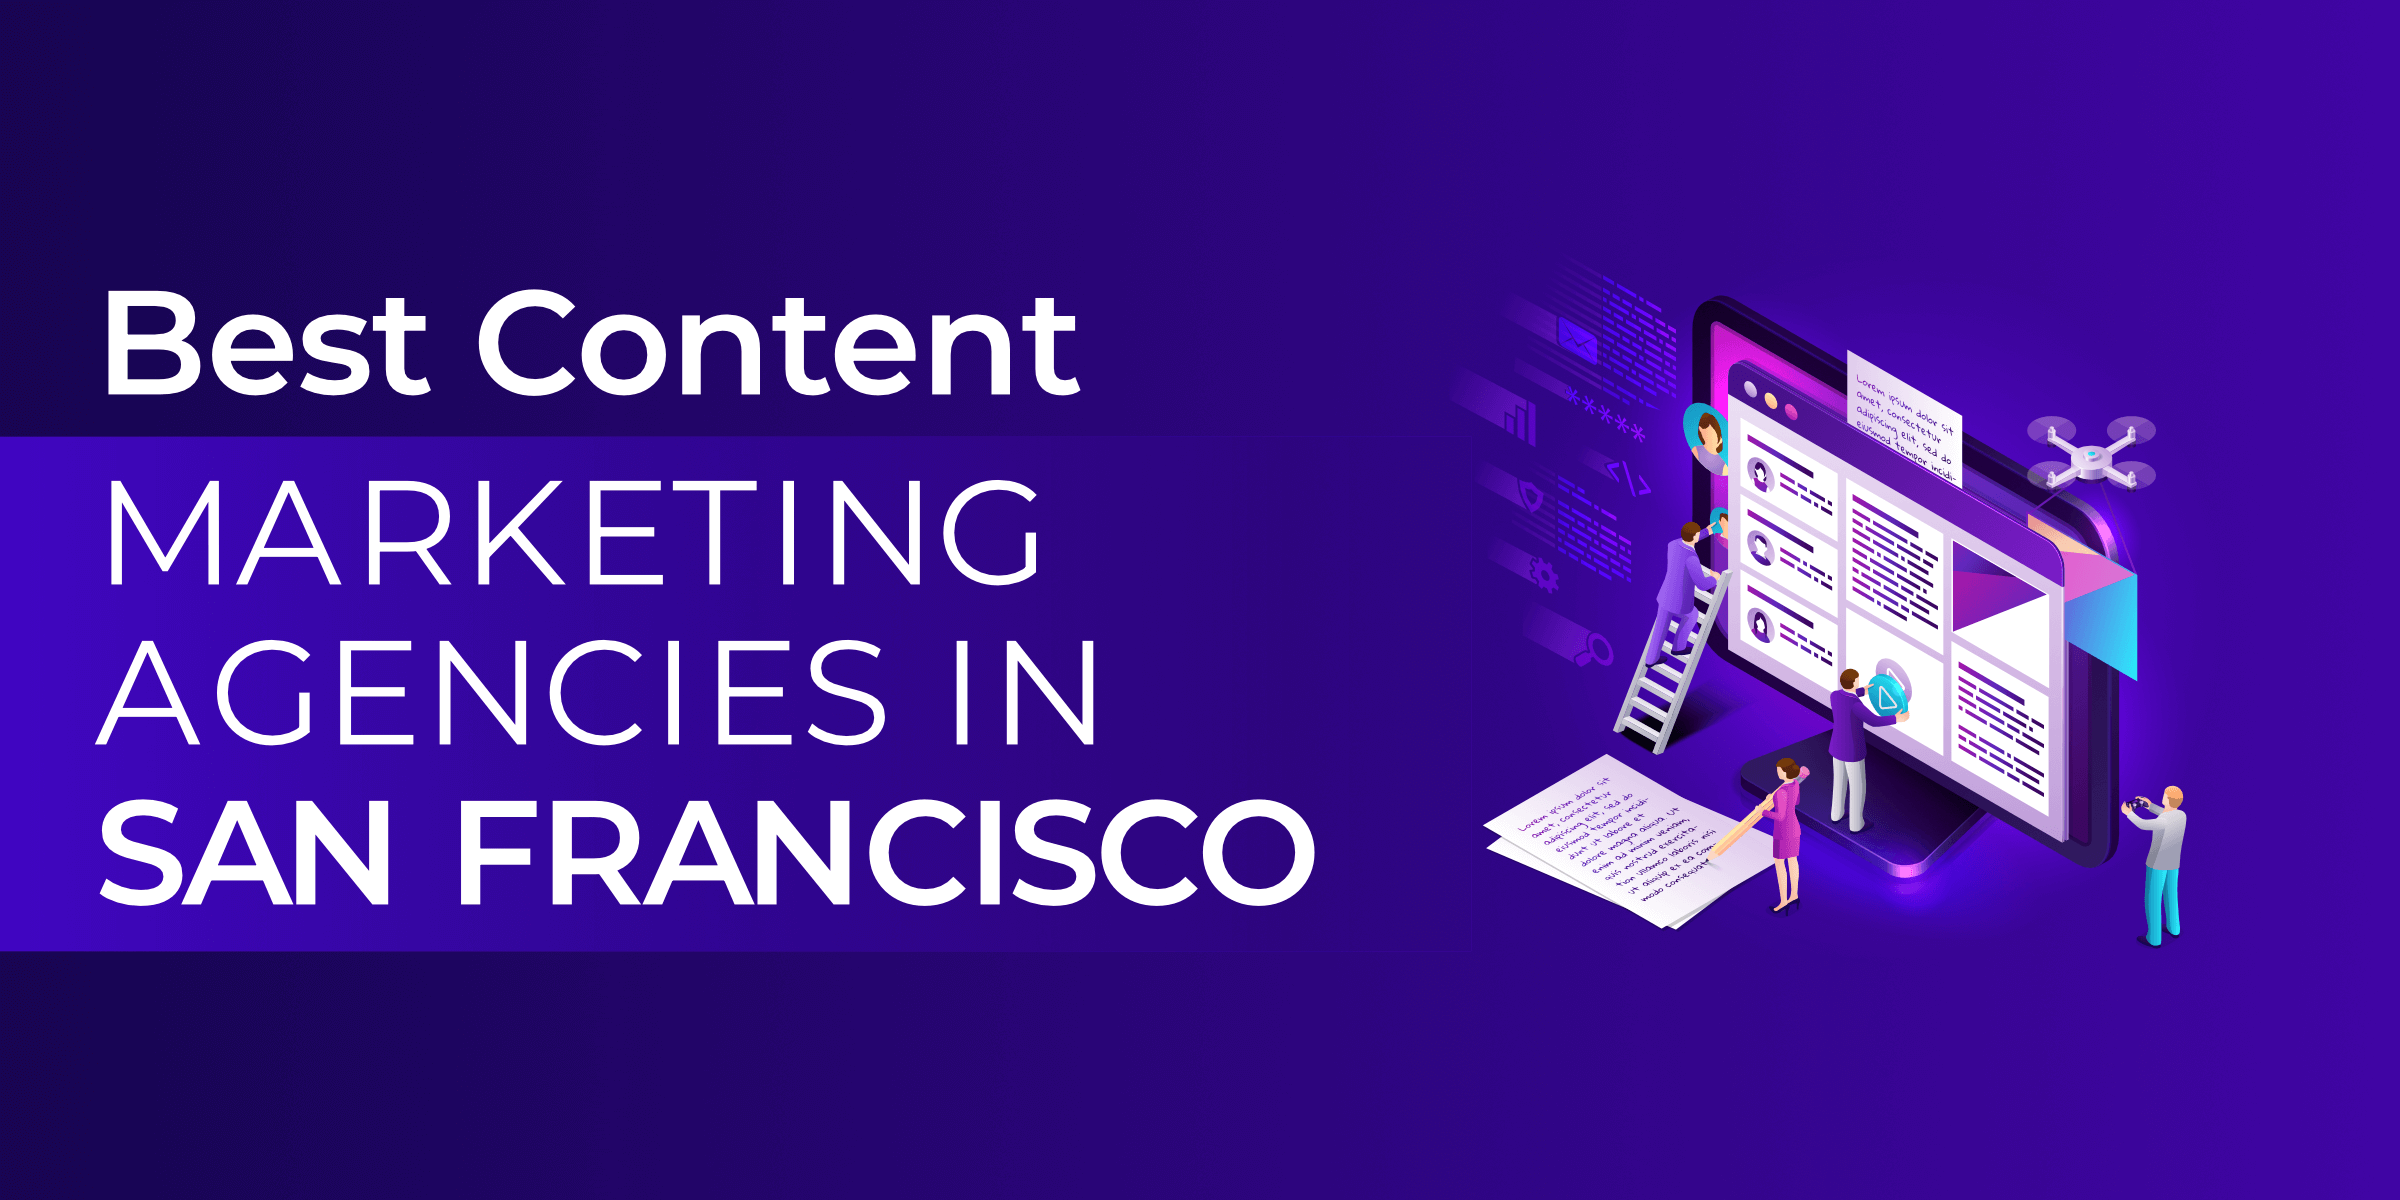 Best Content Marketing Agencies in San Francisco